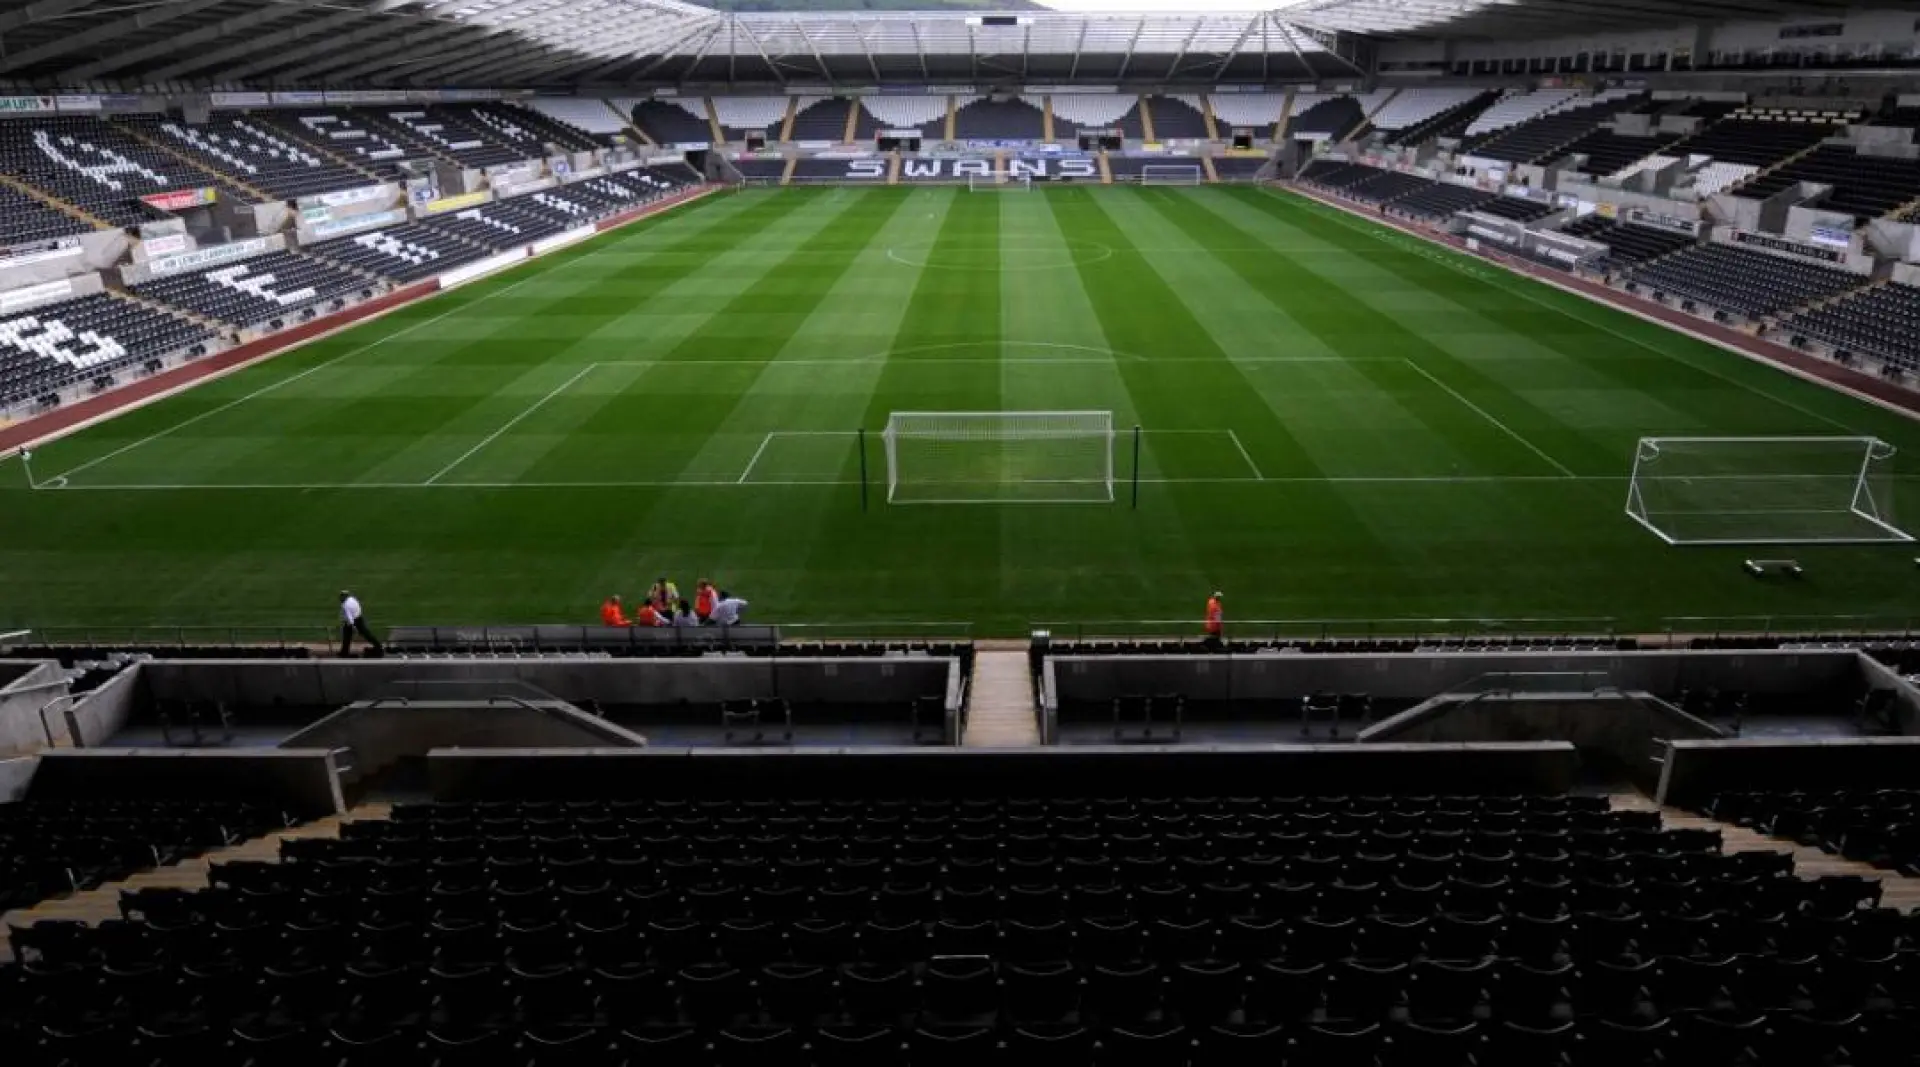 Swansea City - Liberty Stadium